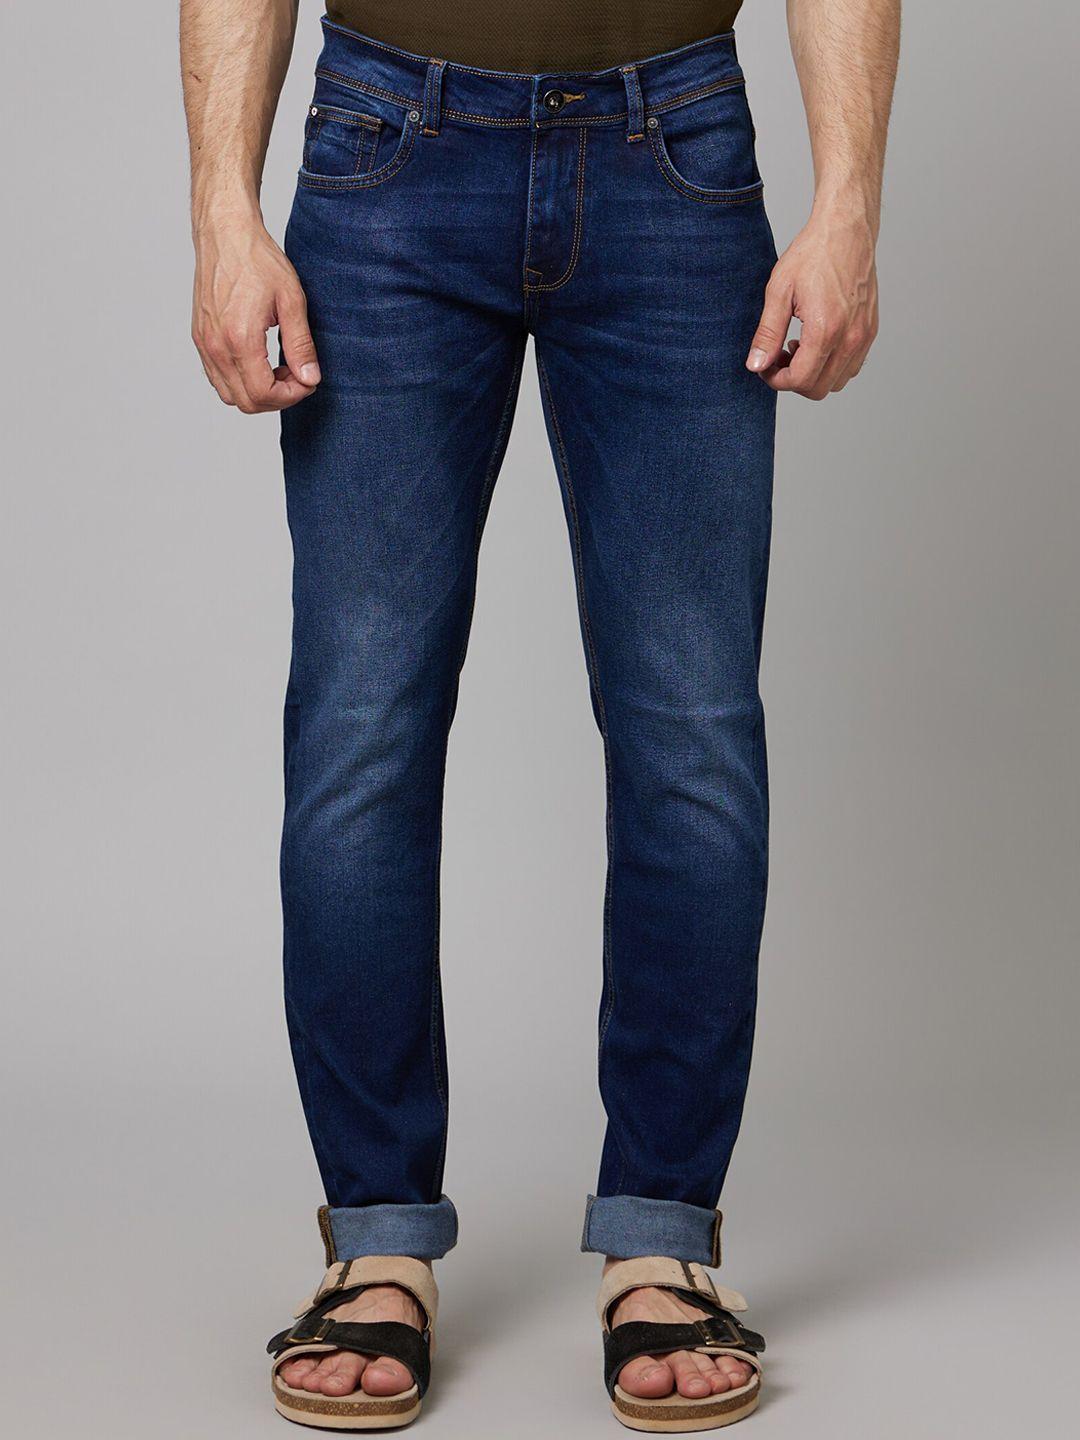 celio-men-jean-light-fade-clean-look-stretchable-jeans